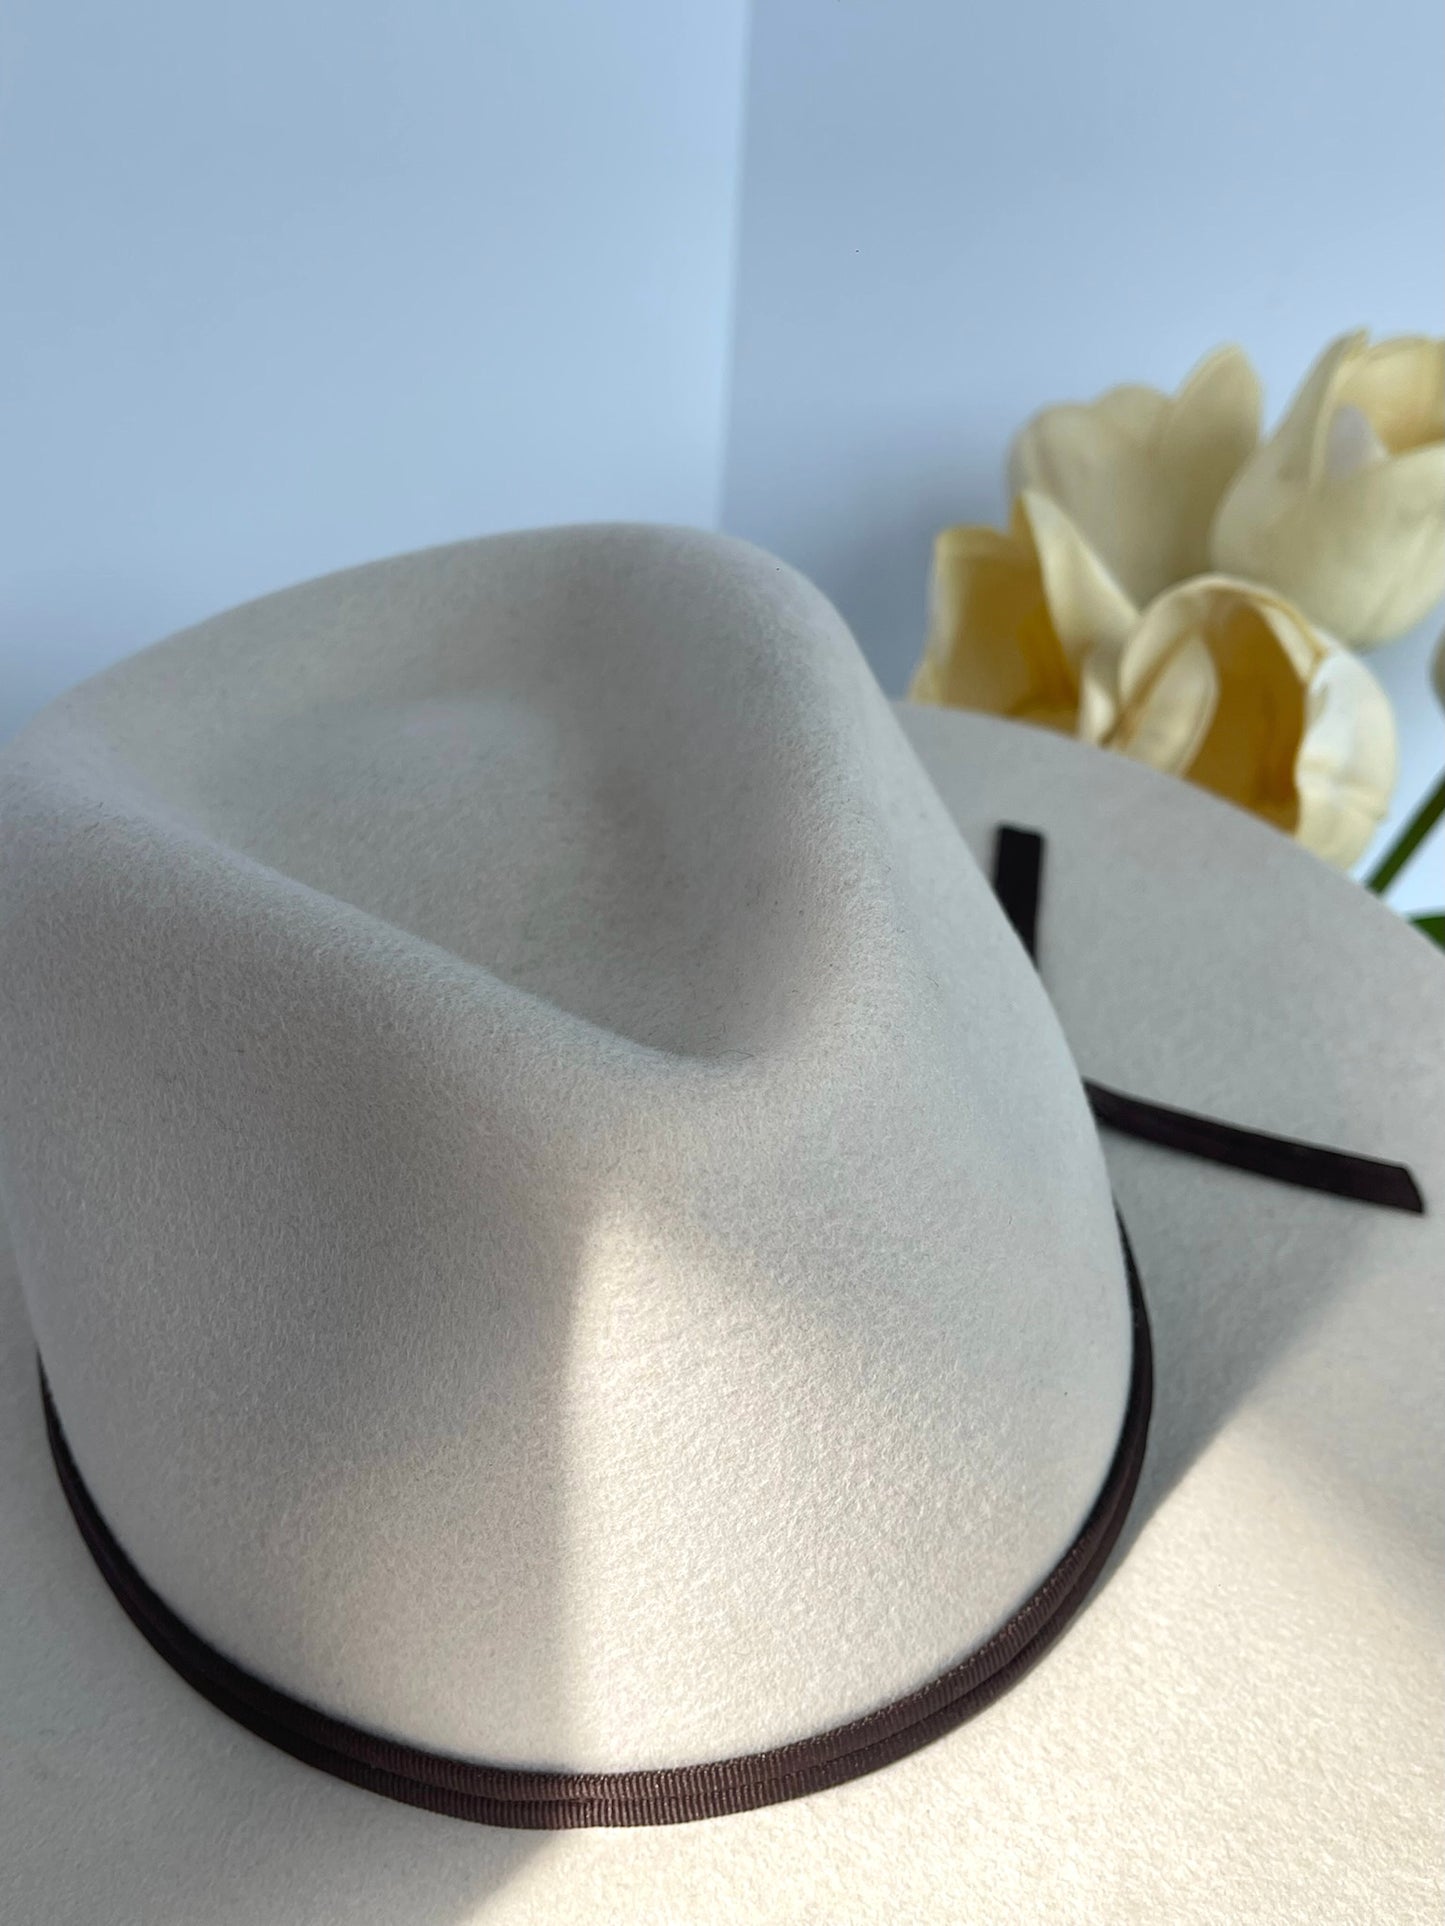 Brixton Cream Felt Hat Size S (56cm)